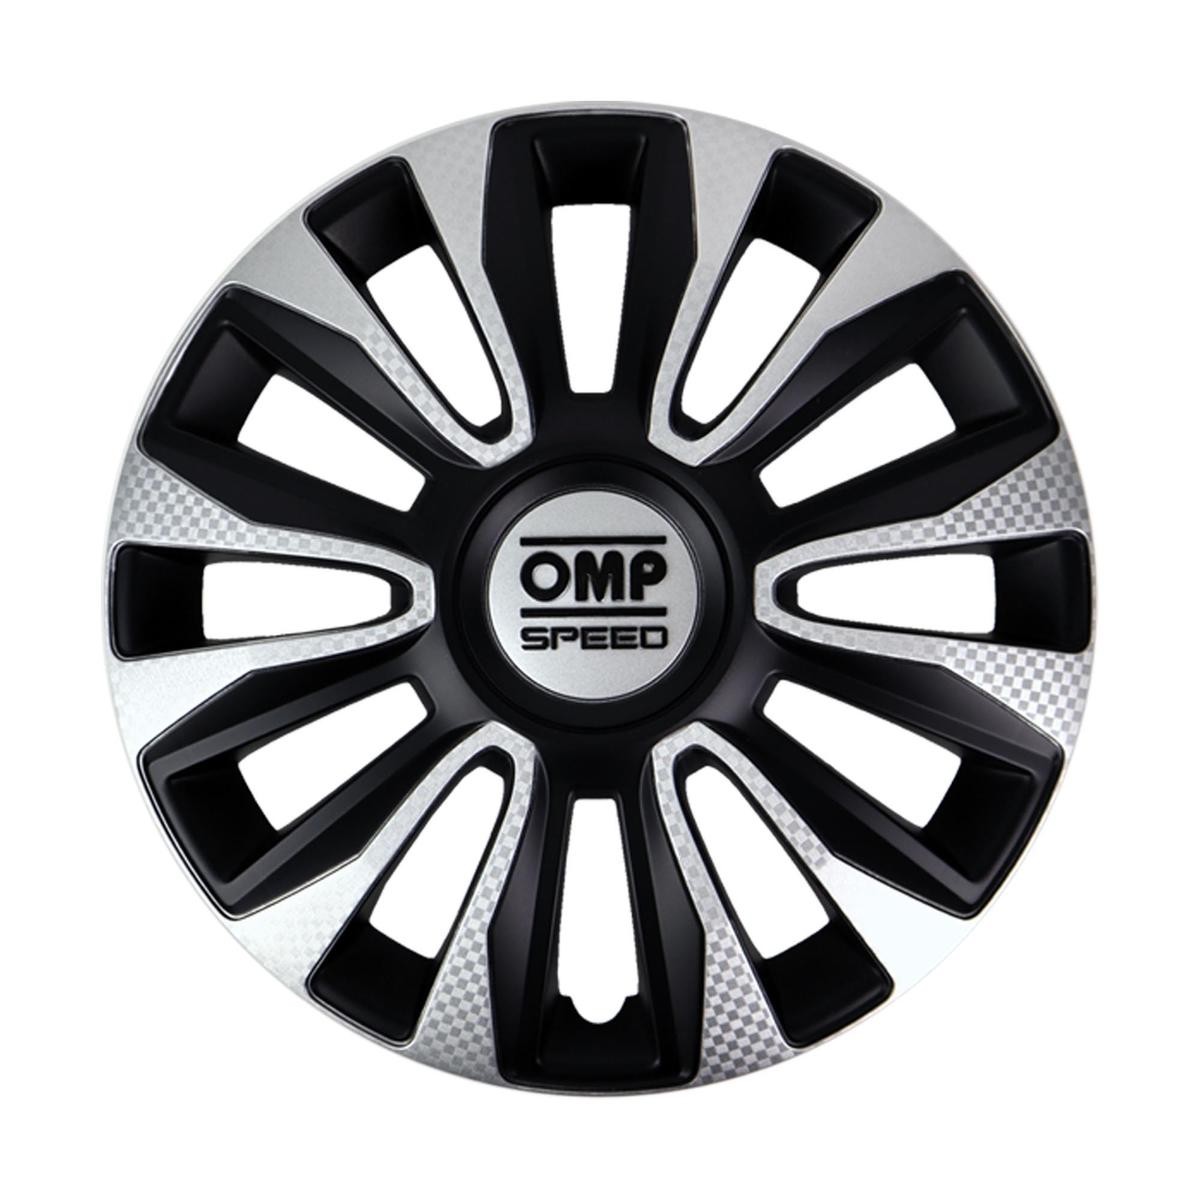 OMP OMPS07011422 Car wheel trims VW POLO (9N_) 14 Inch black/silver, Carbon